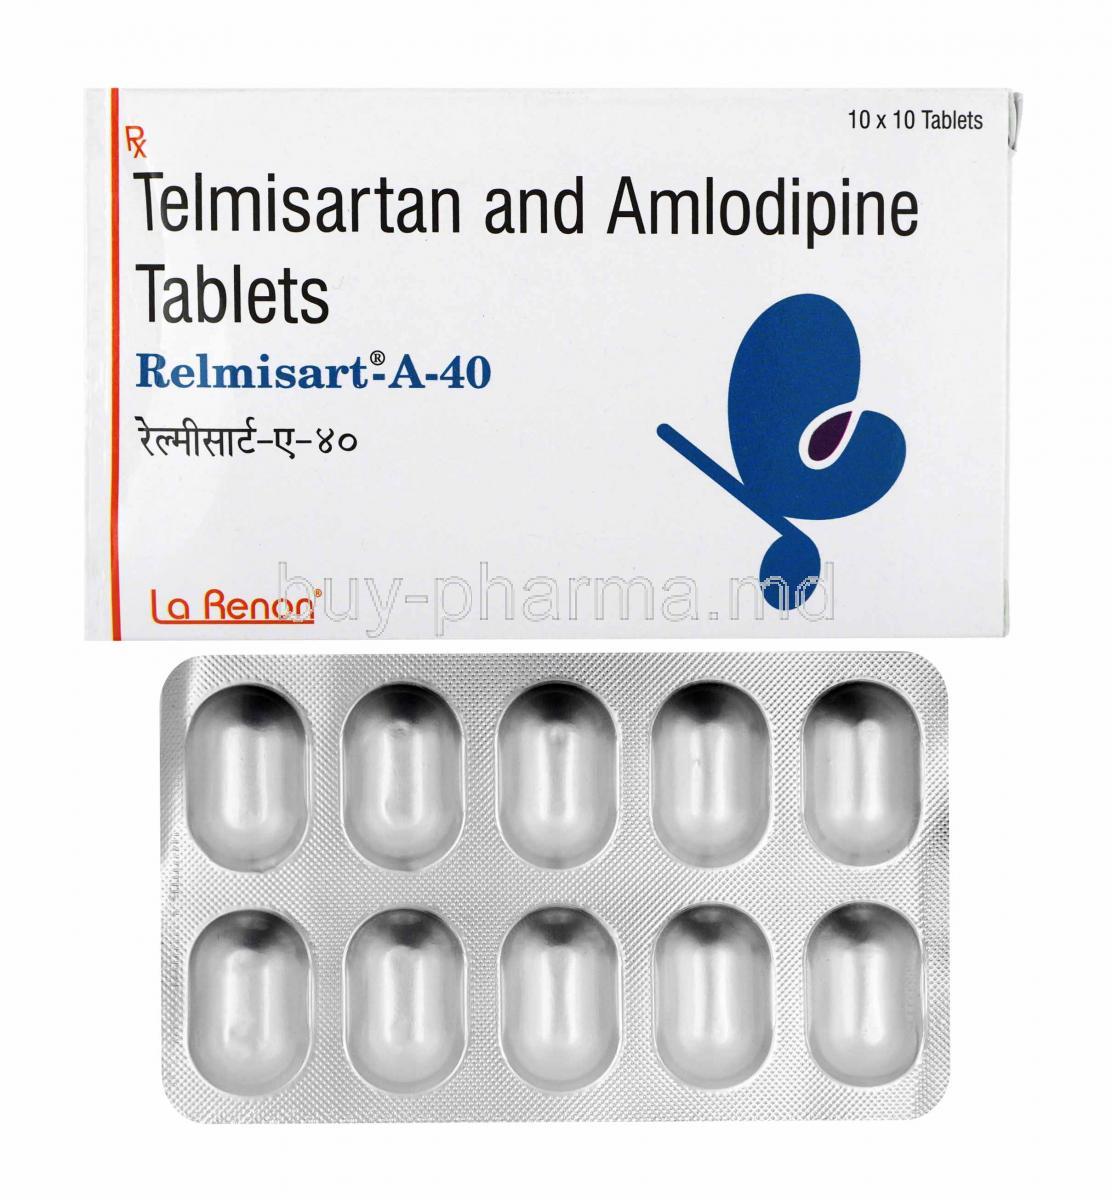 Relmisart-A, Telmisartan and Amlodipine box and tablets